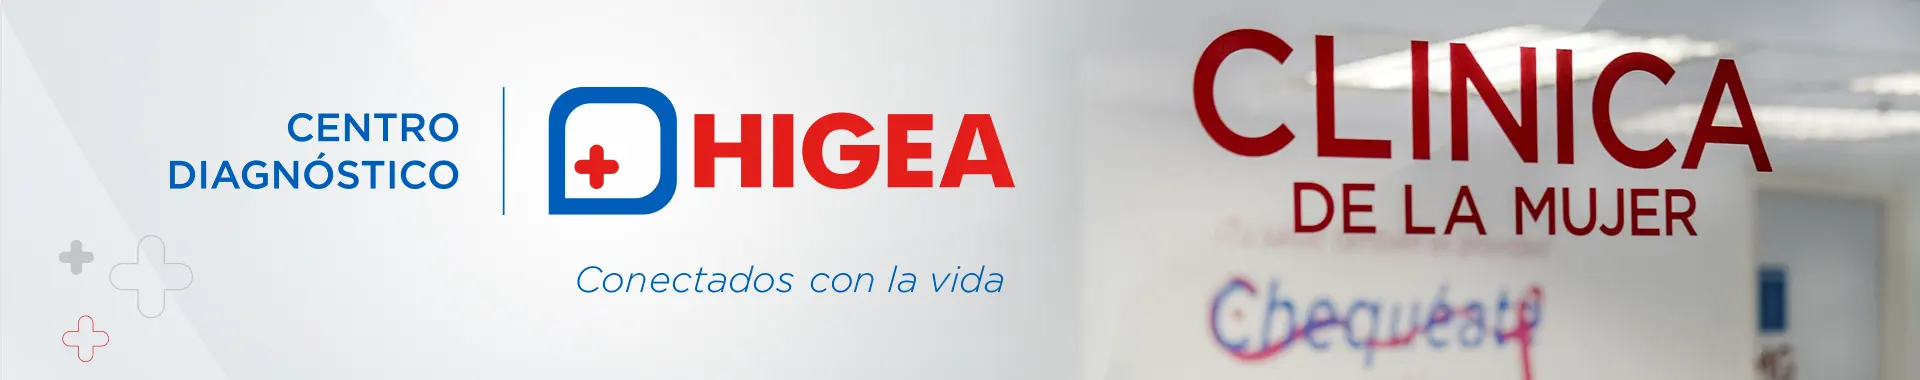 Imagen 1 del perfil de Centro Diagnóstico Higea